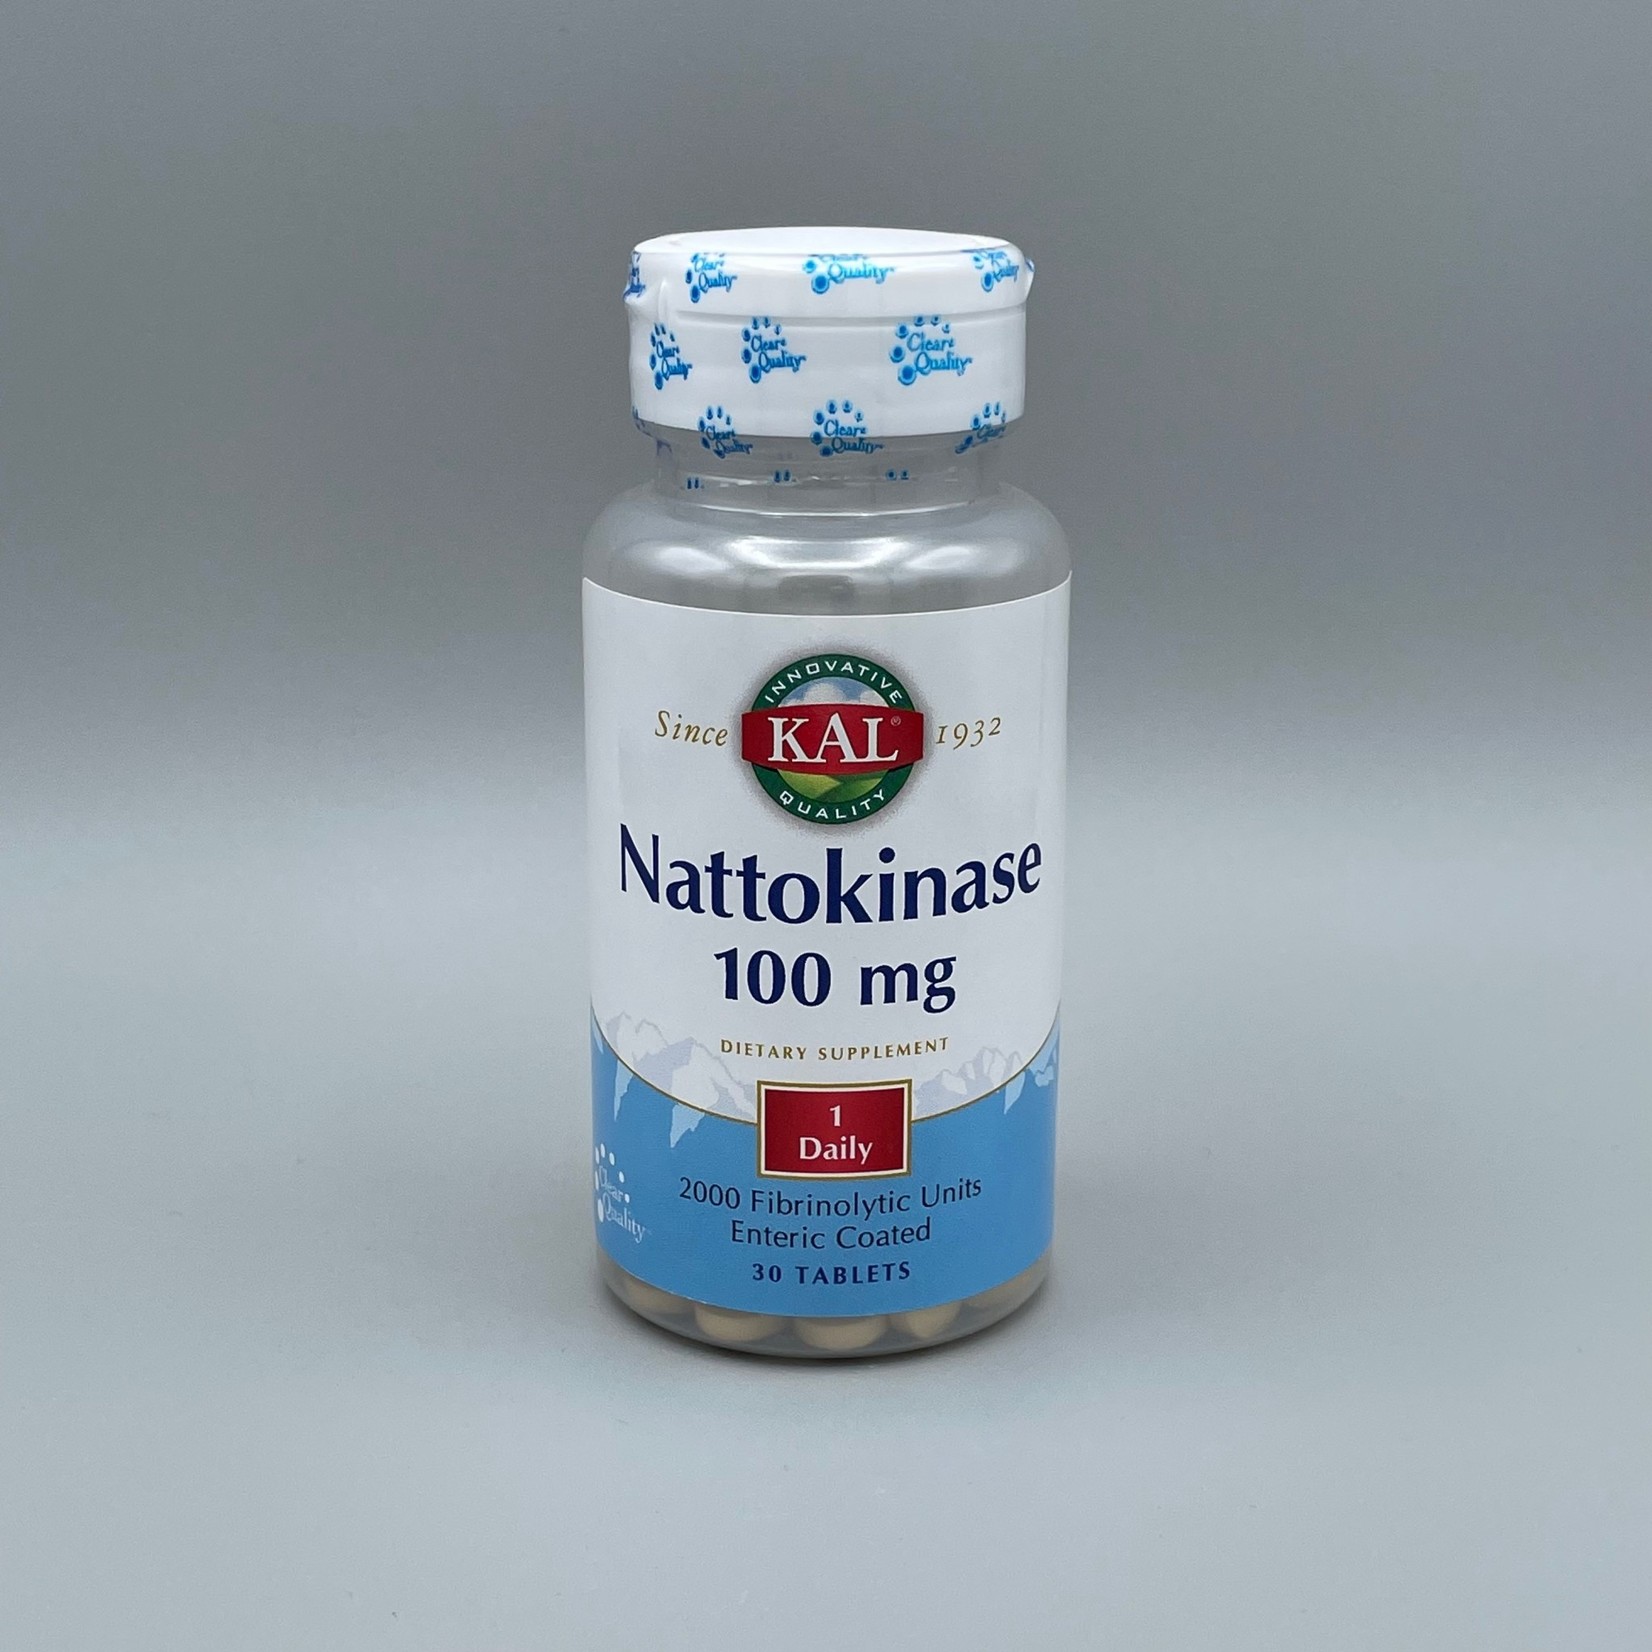 Kal Nattokinase (1 Daily) - 100 mg, 30 Tablets